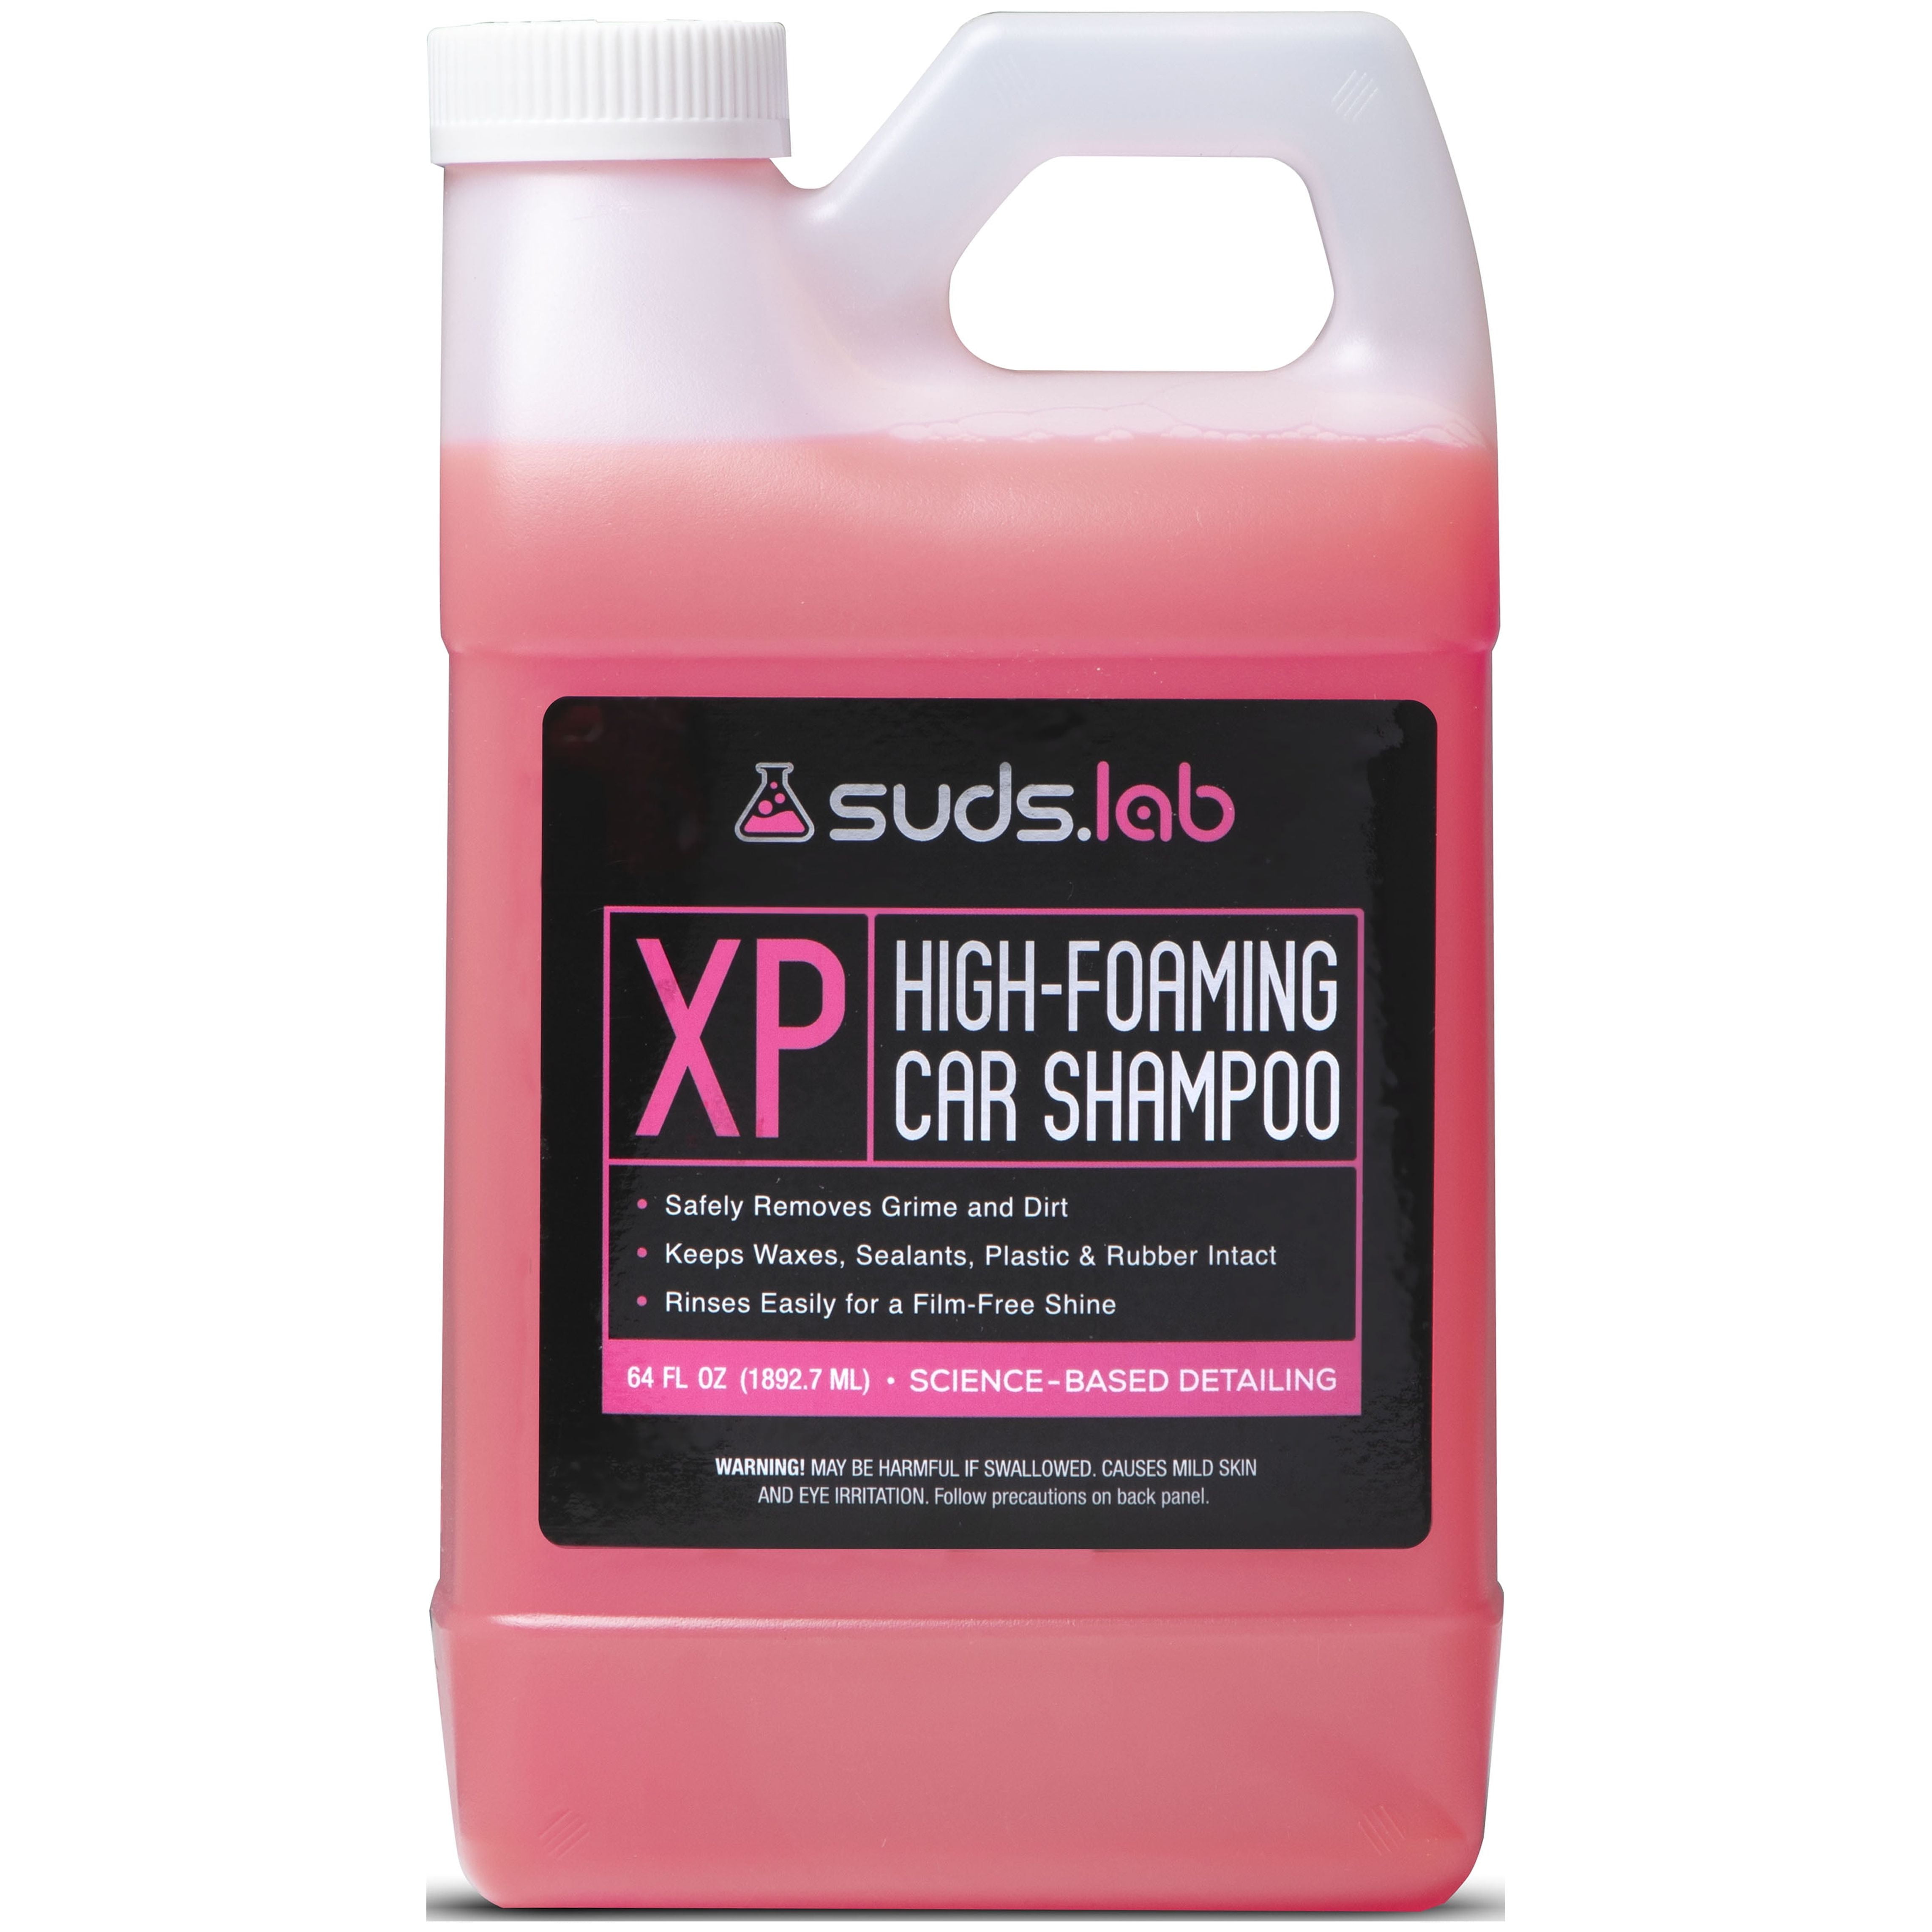 Car Wash Shampoo High Foam Cannon Soap Concentrate Cherry Scent 64oz USA